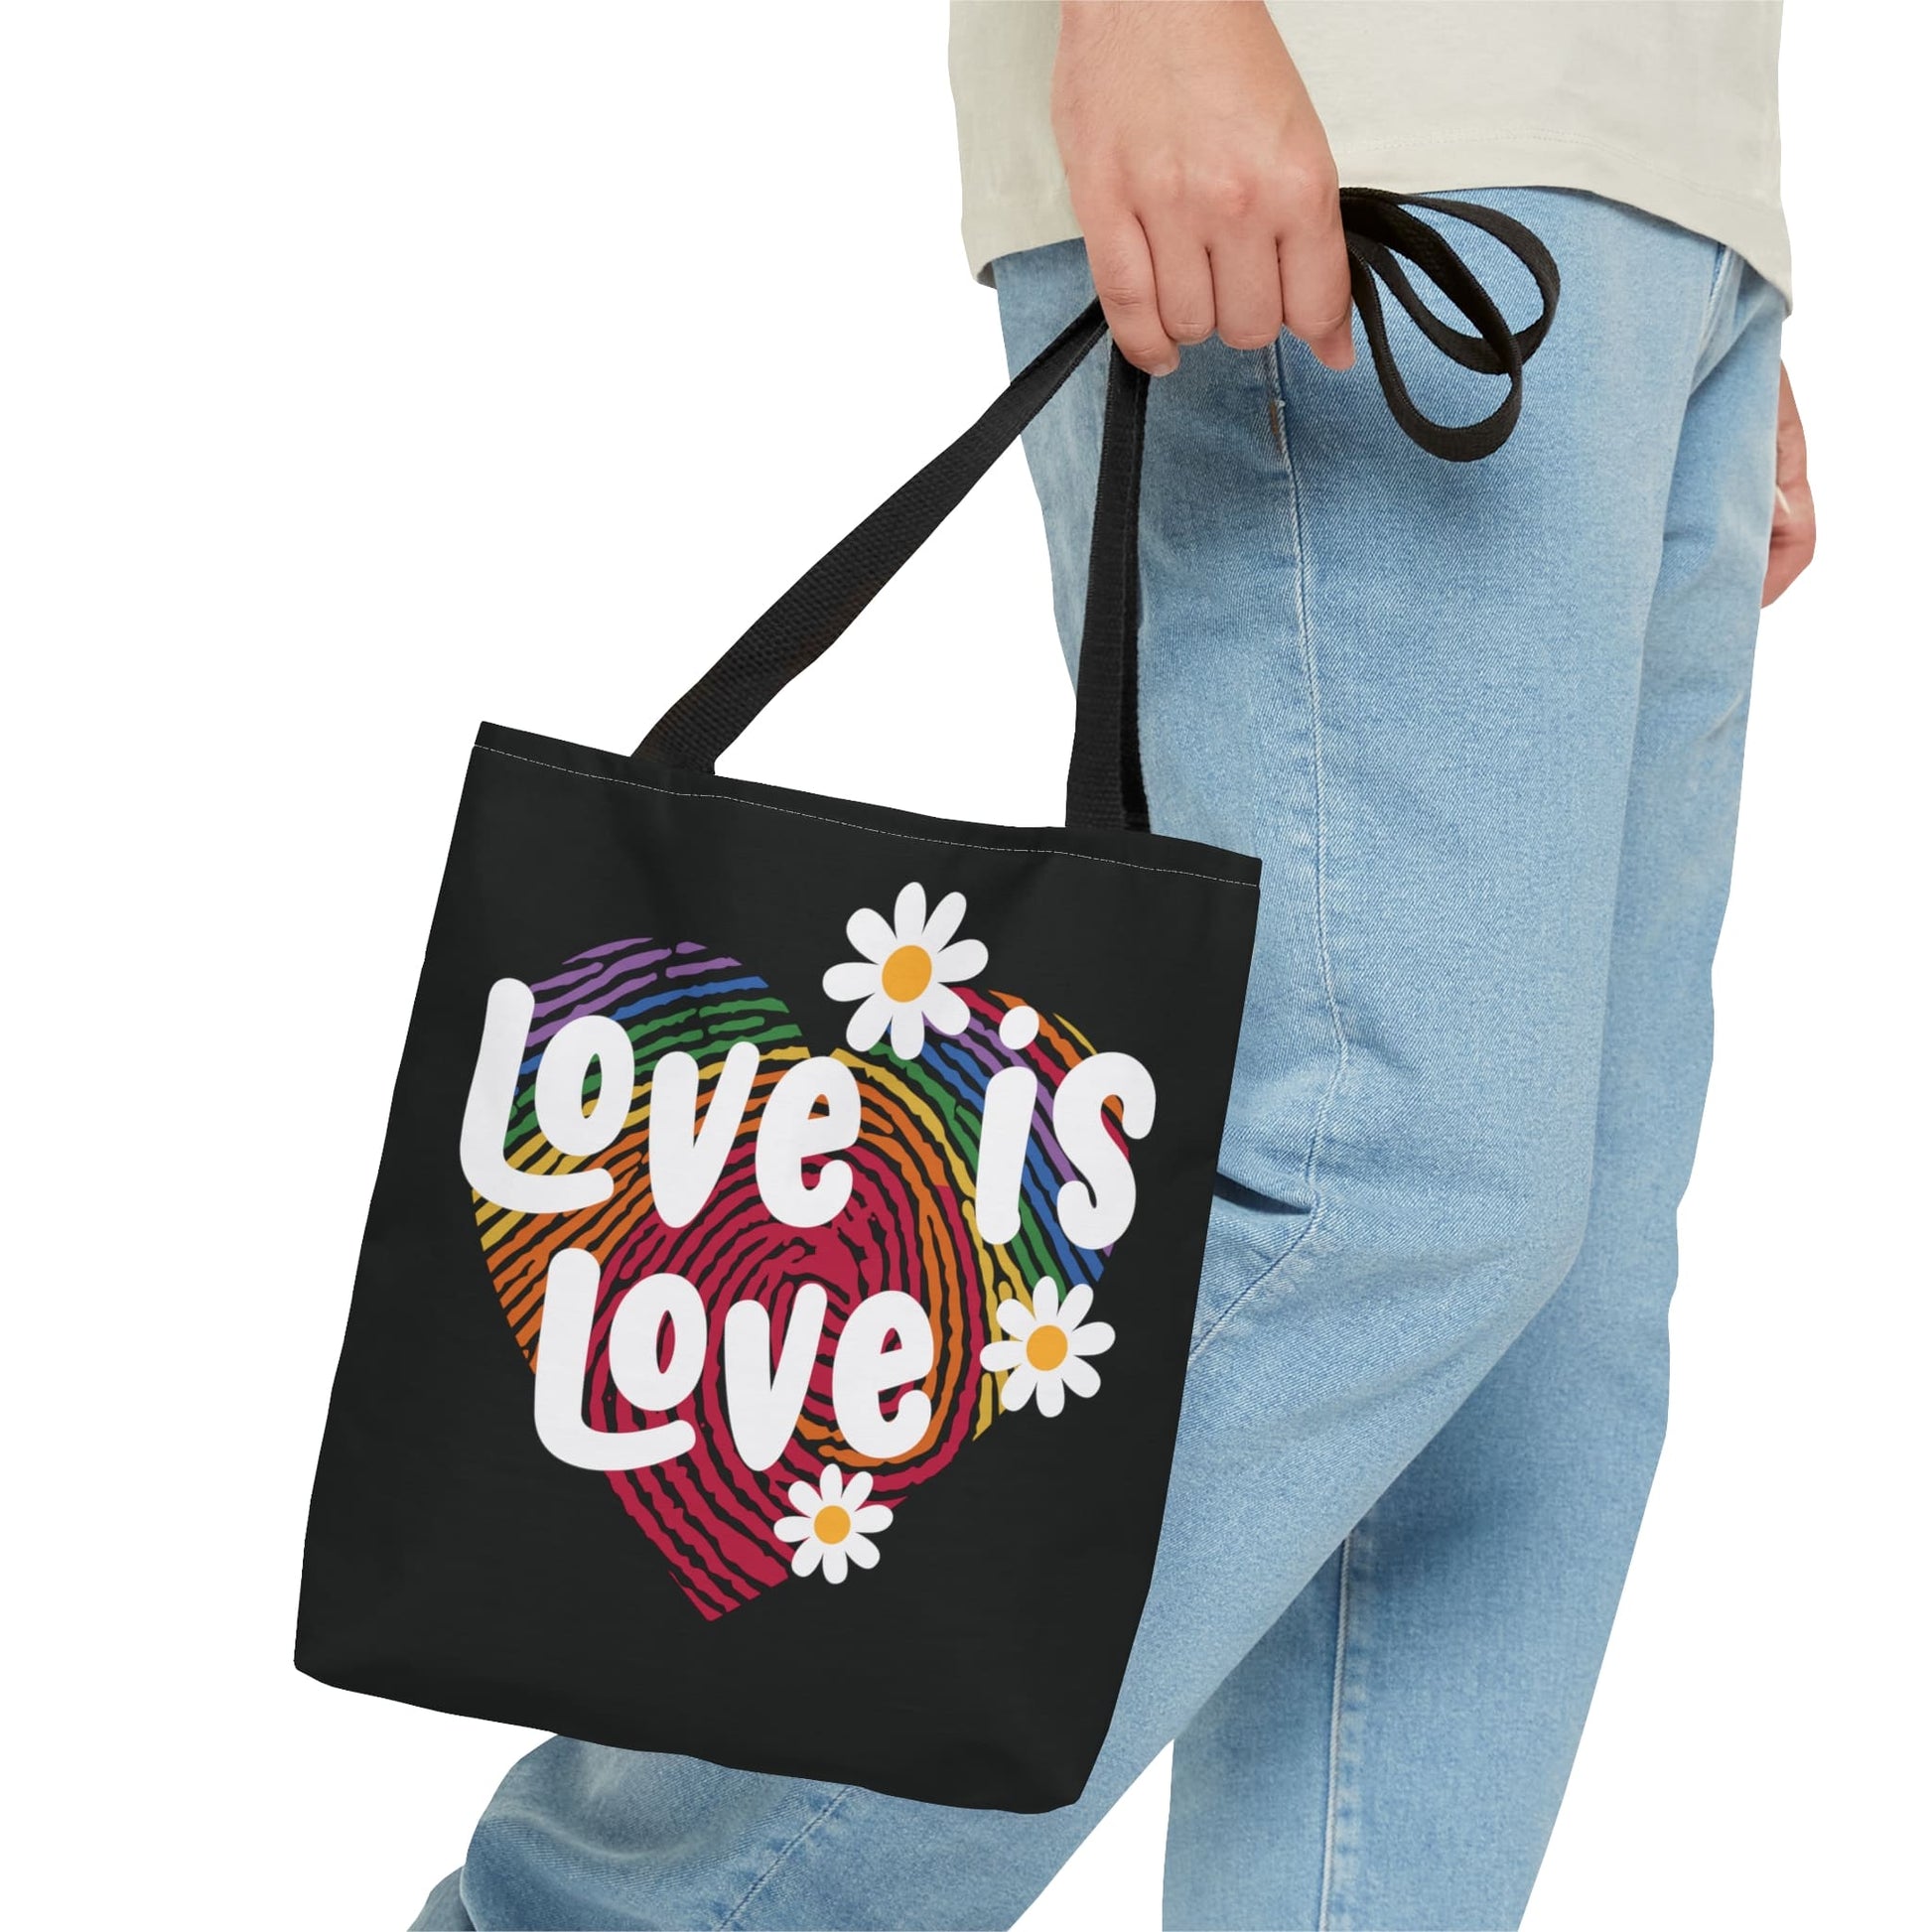 LGBT pride tote bag, love is love bag, small